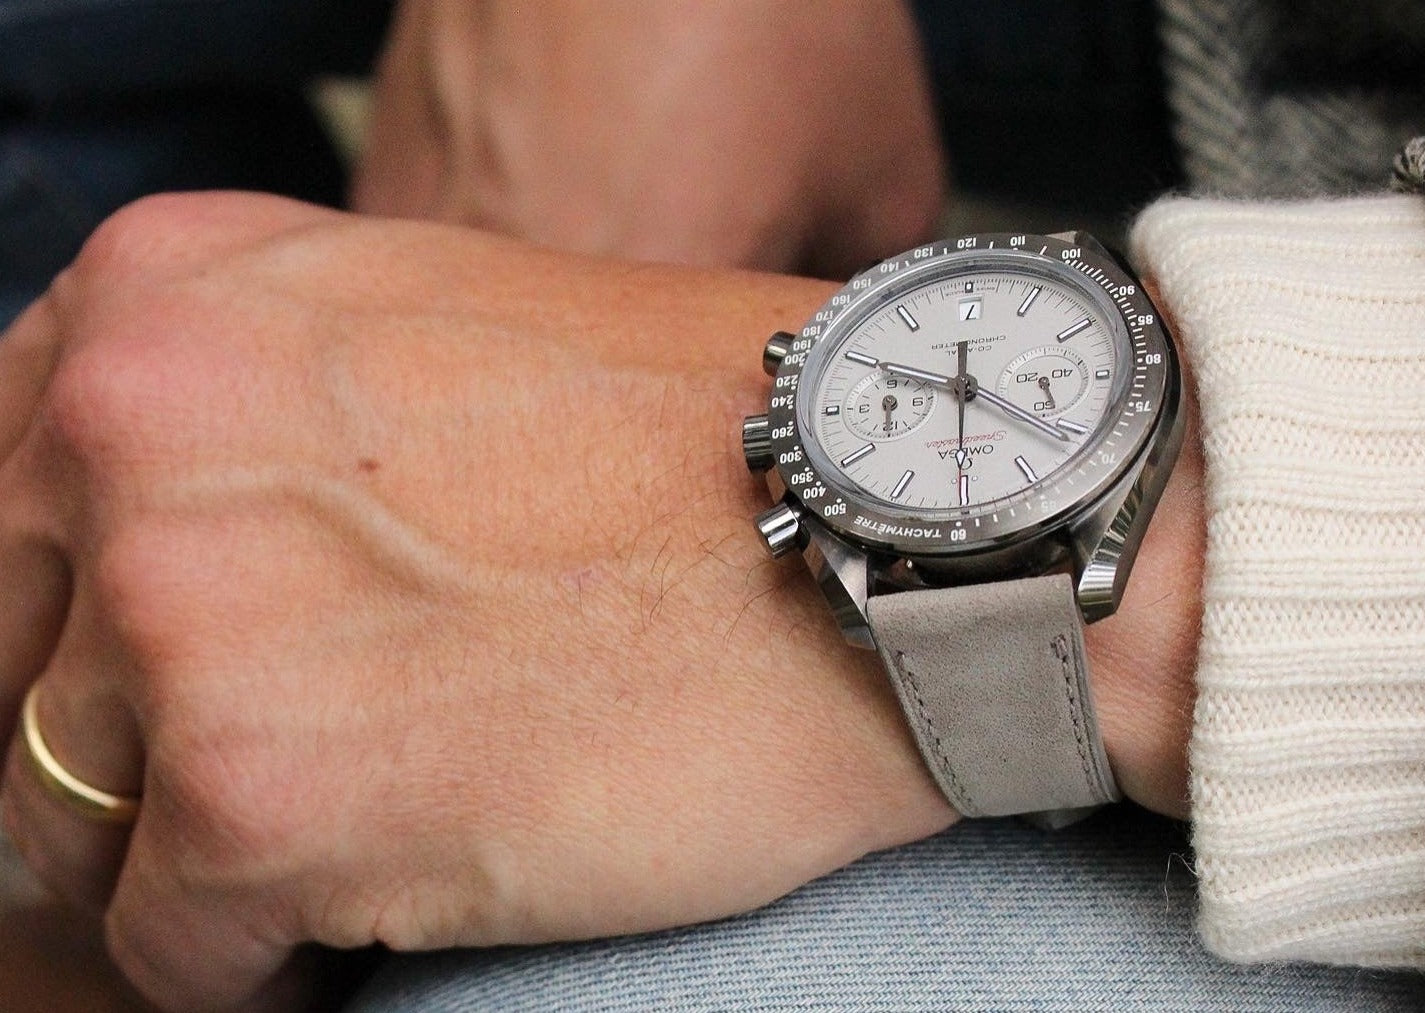 The Grahampton Watch Strap in Light Grey